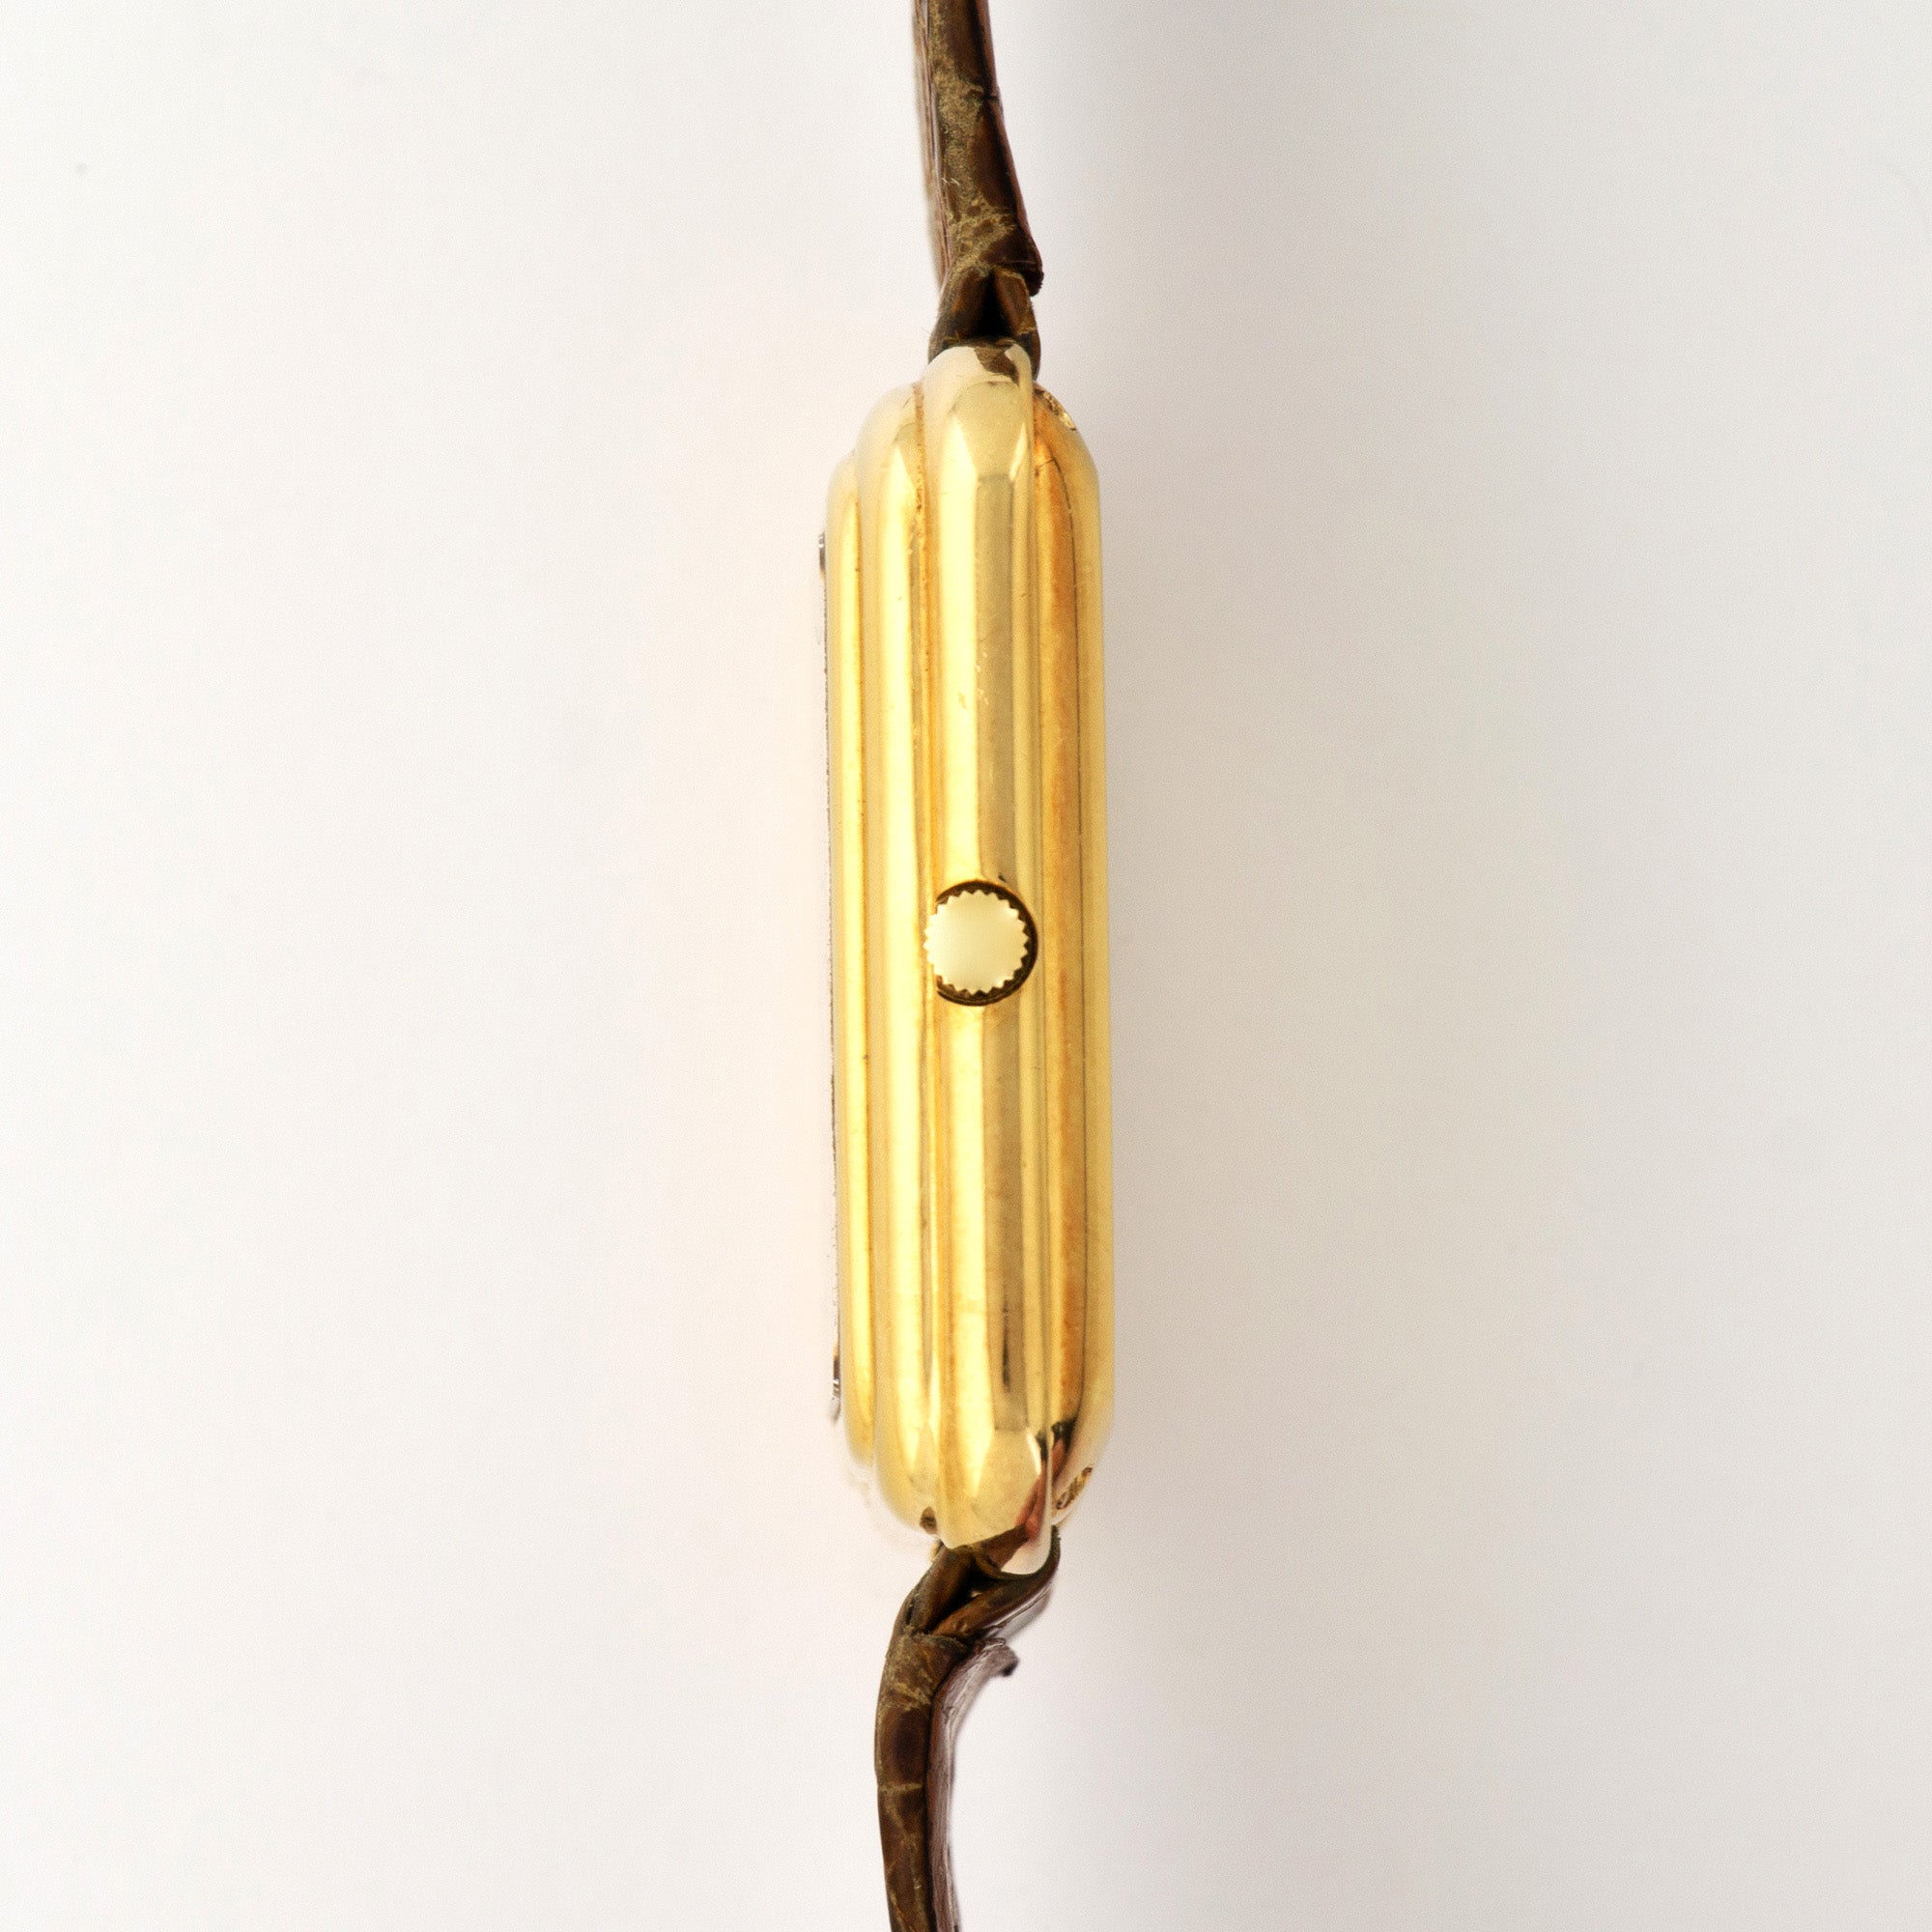 Piaget - Piaget Yellow Gold Beta 21 Tigerseye Watch Ref. 14101 - The Keystone Watches